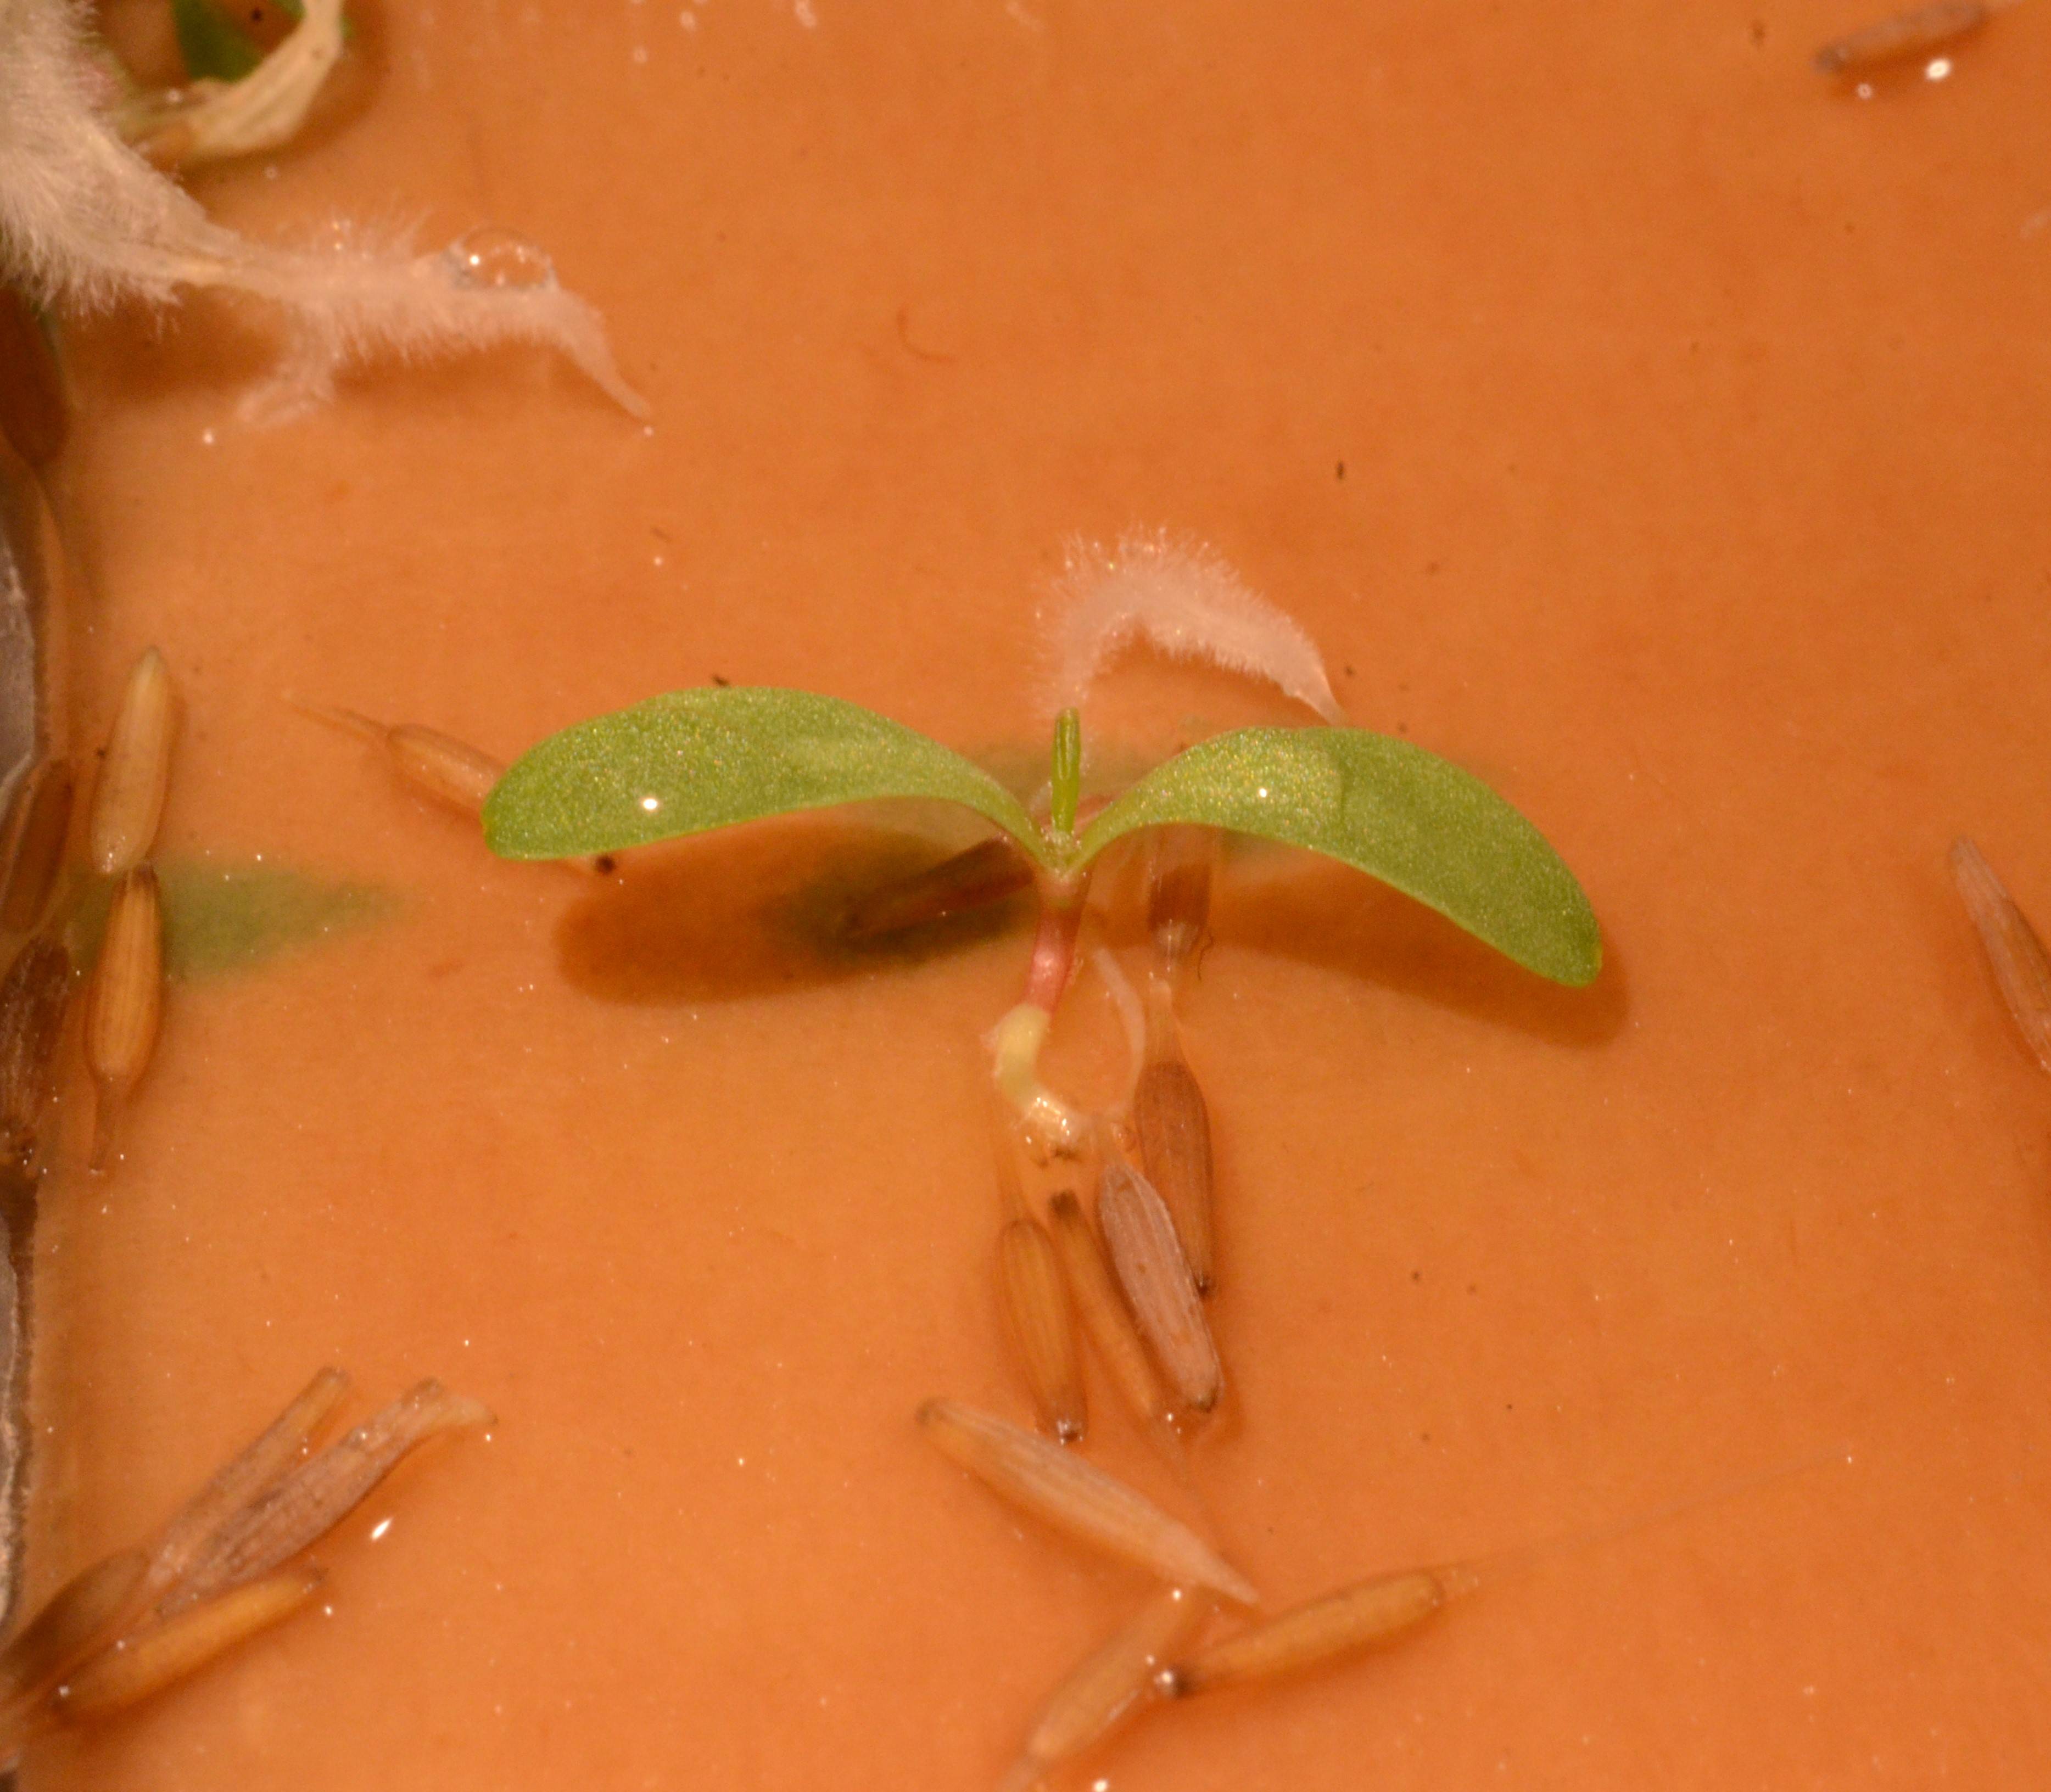 Agoseris grandiflora seedling with cotyledons (seed leaves).